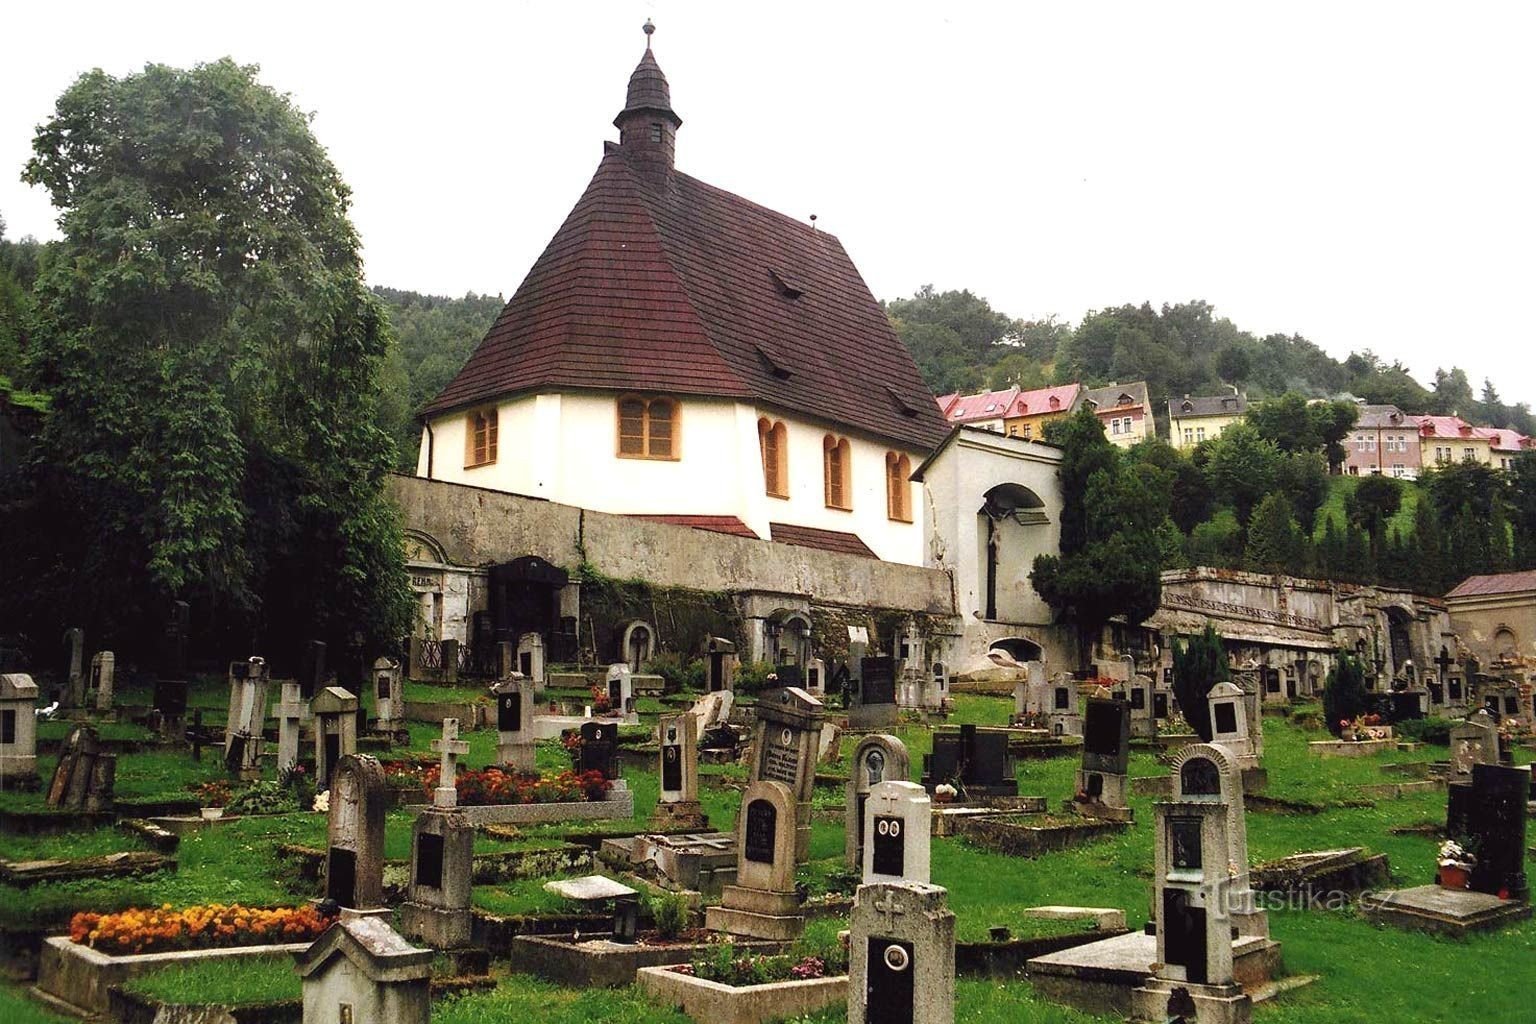 Pogled s groblja - Autor: V. Vojíř